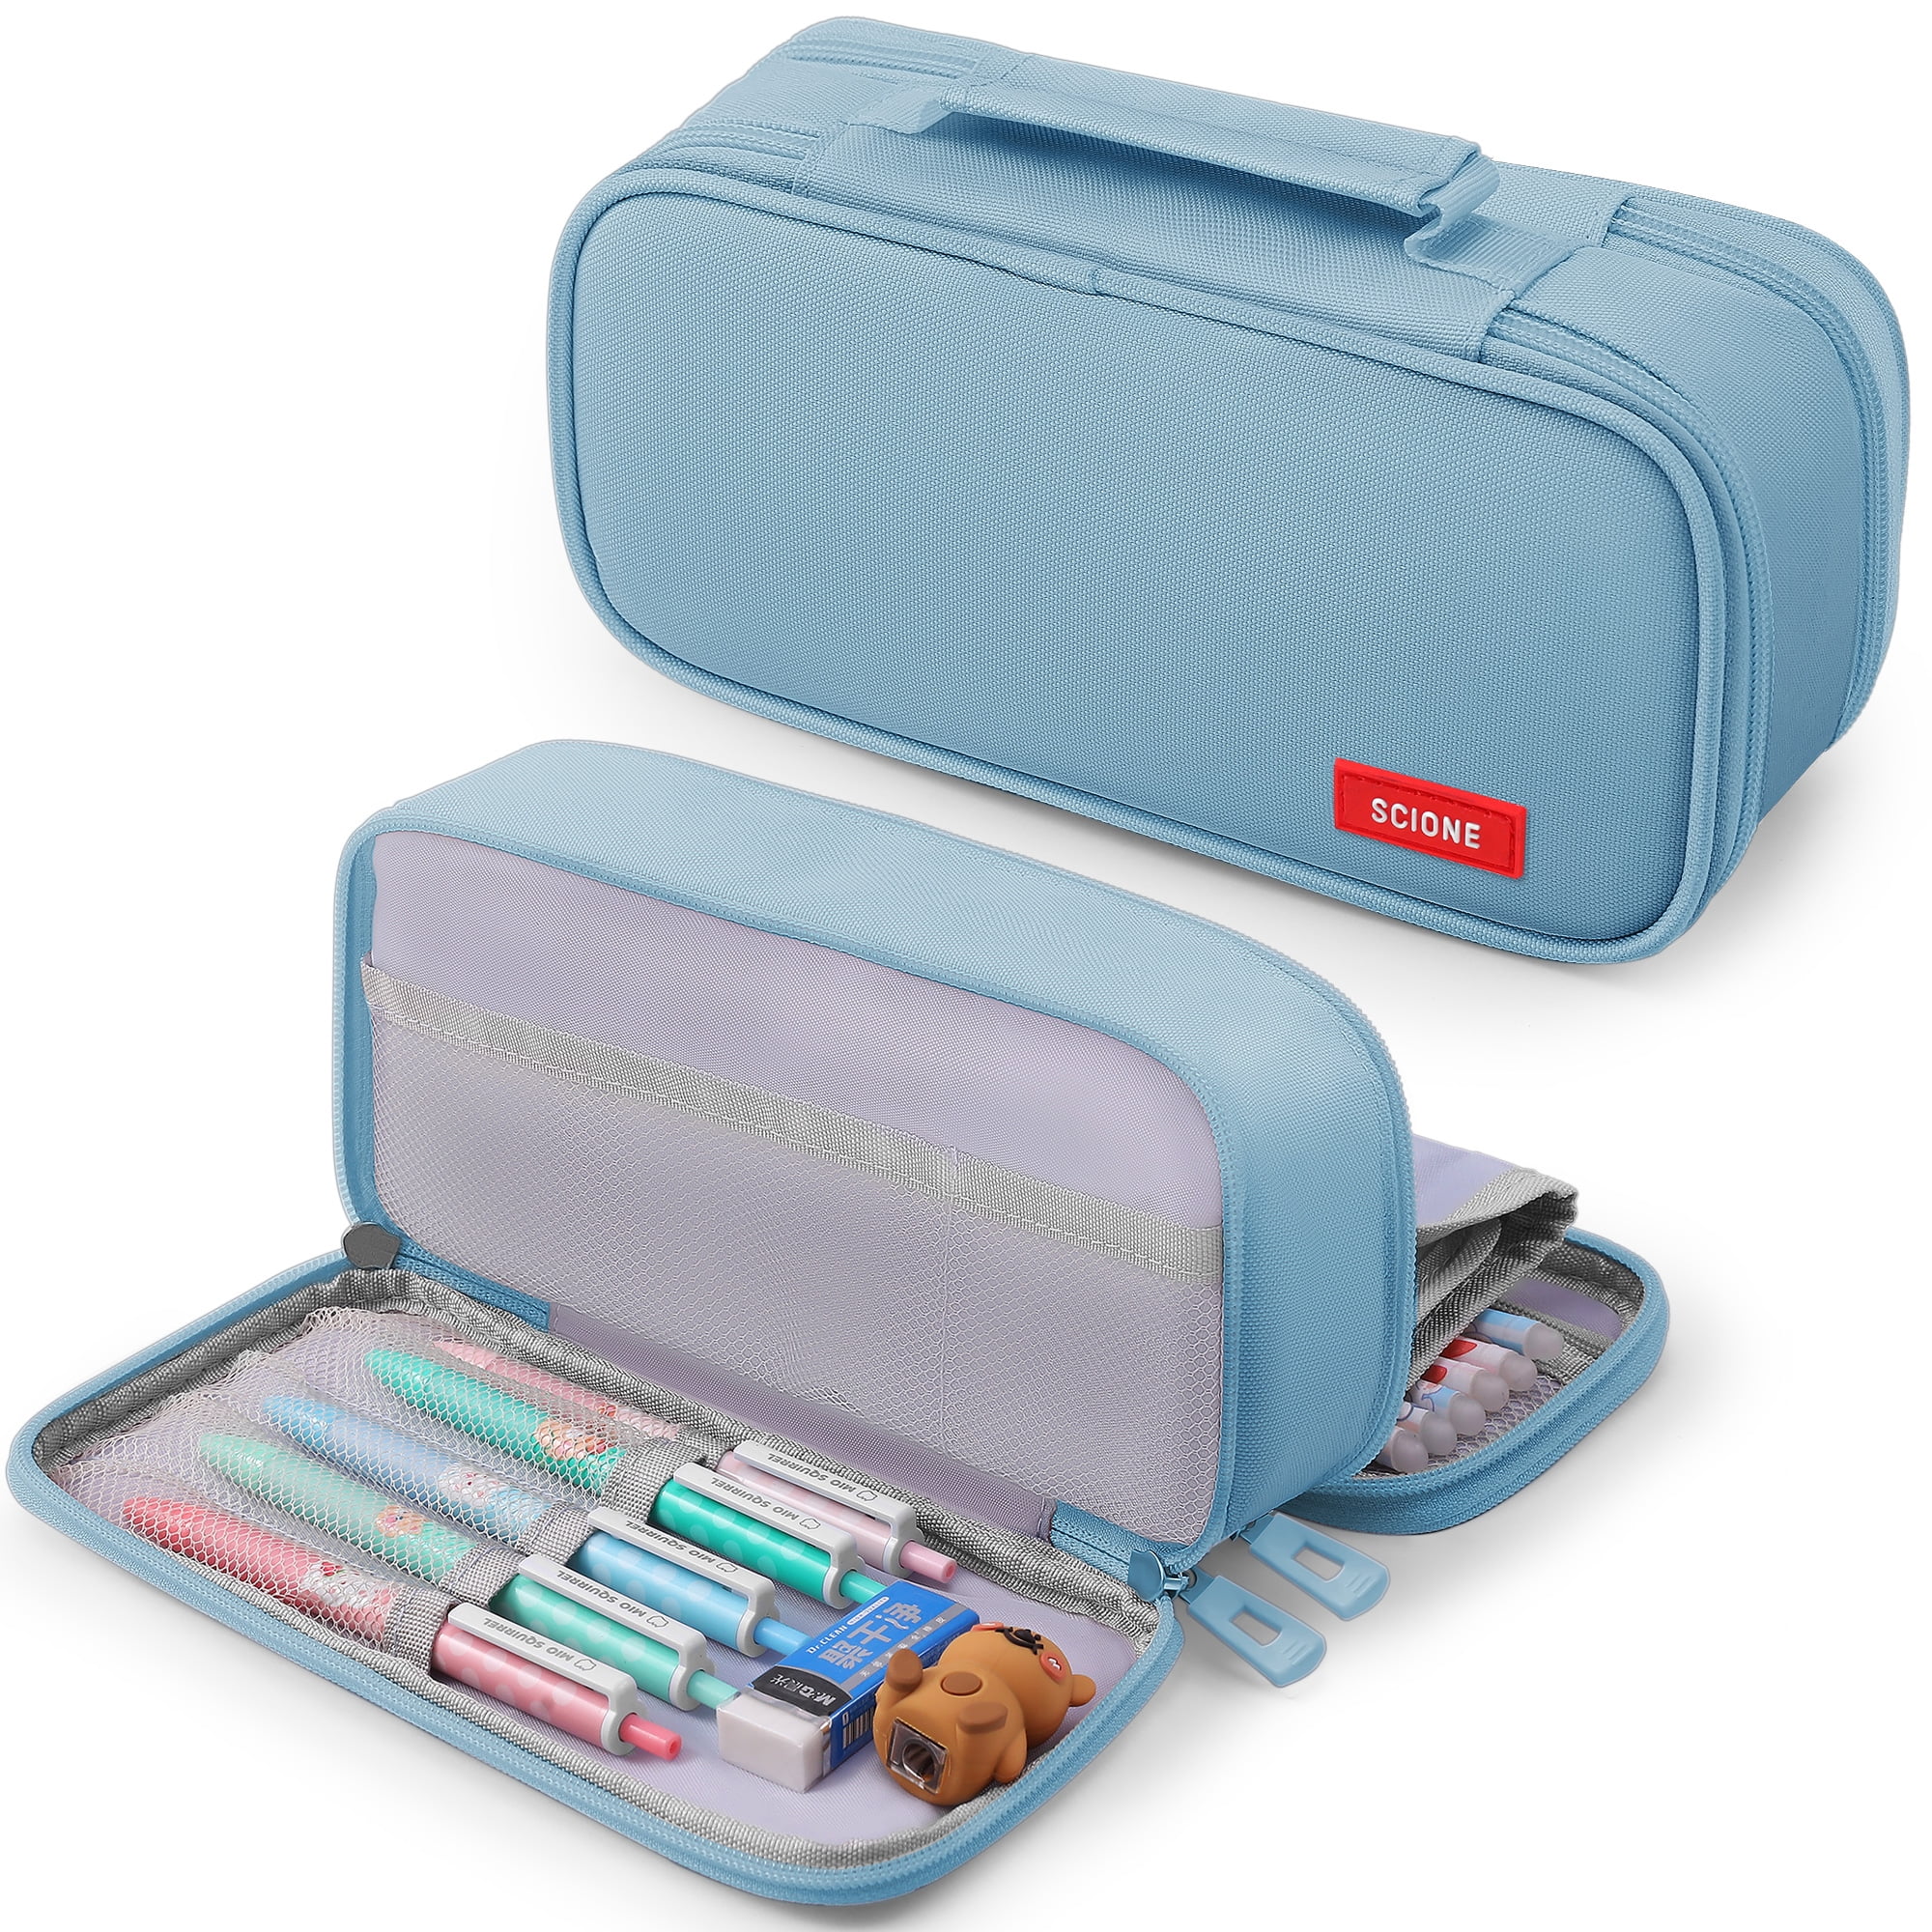 Portable Pencil Box Organizer Storage Case Pen Marker Holder Pencil Holder  for Teen Girls Students Kids Gifts